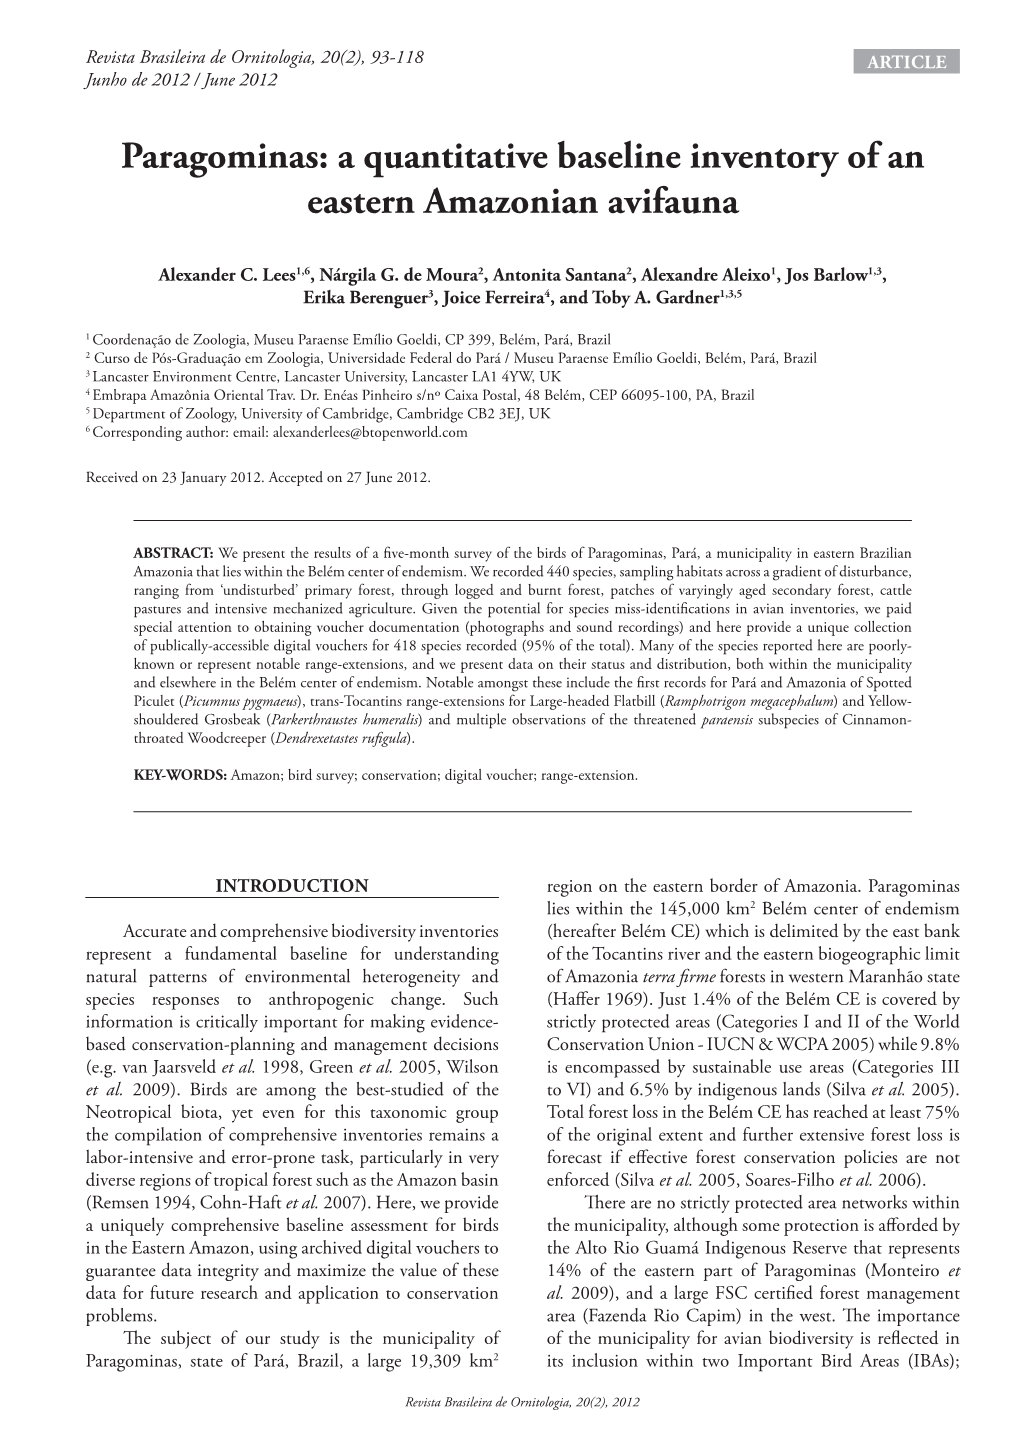 Paragominas: a Quantitative Baseline Inventory of an Eastern Amazonian Avifauna